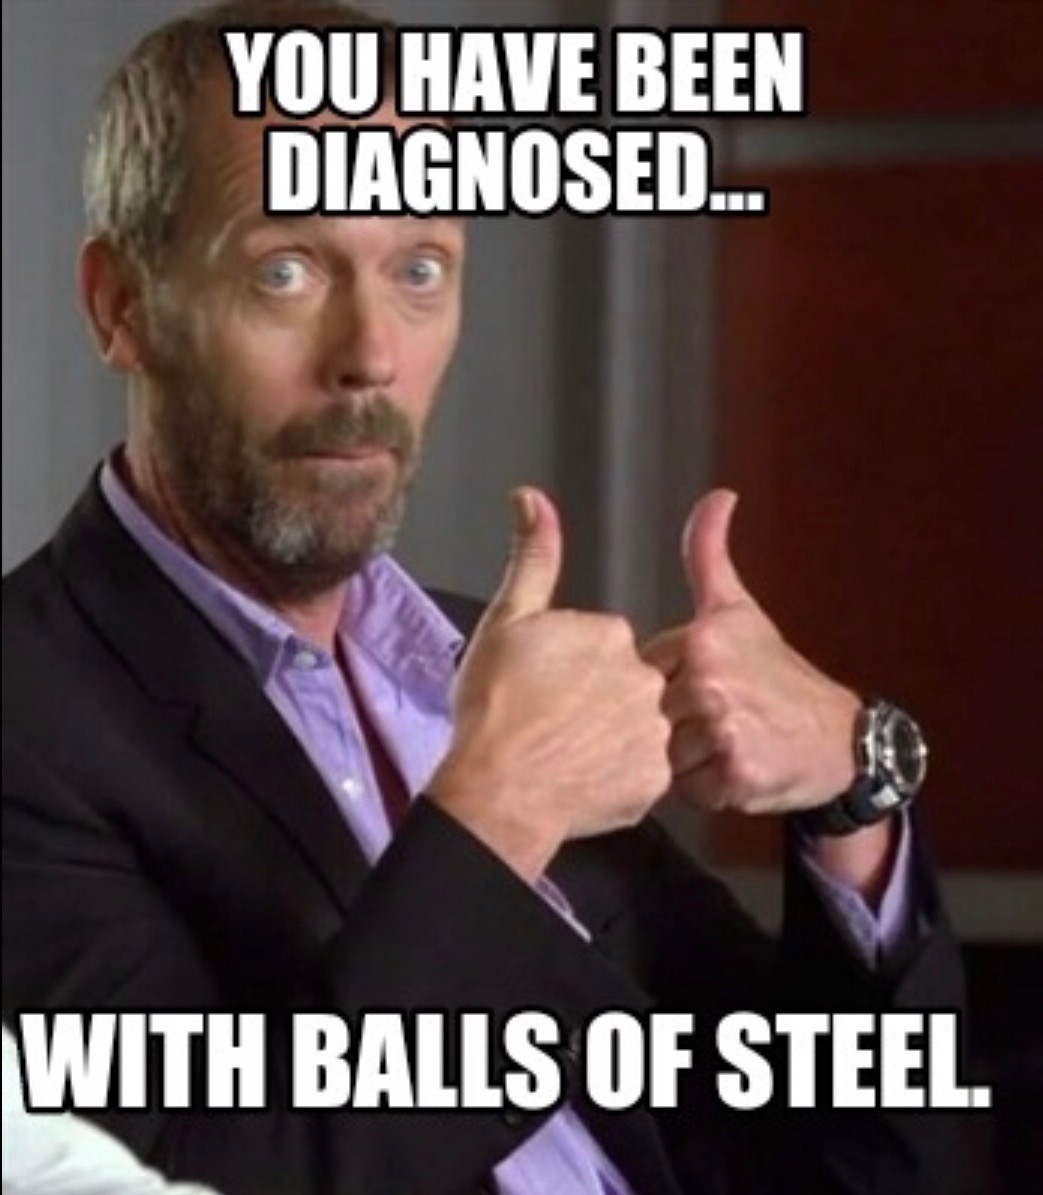 balls of steel.JPG